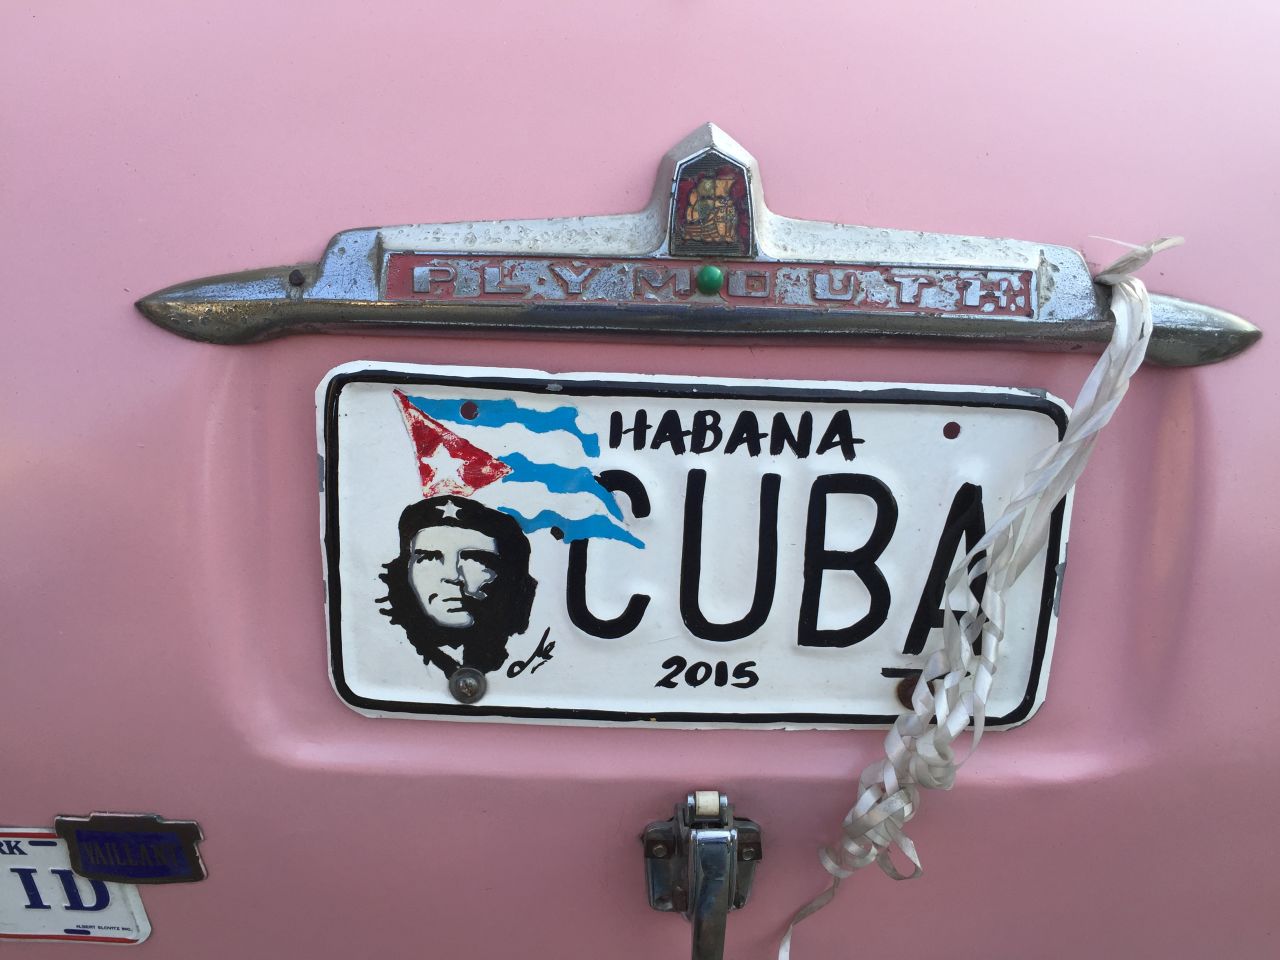 "If you don't do it, it's almost like you didn't come to Cuba," she added. 